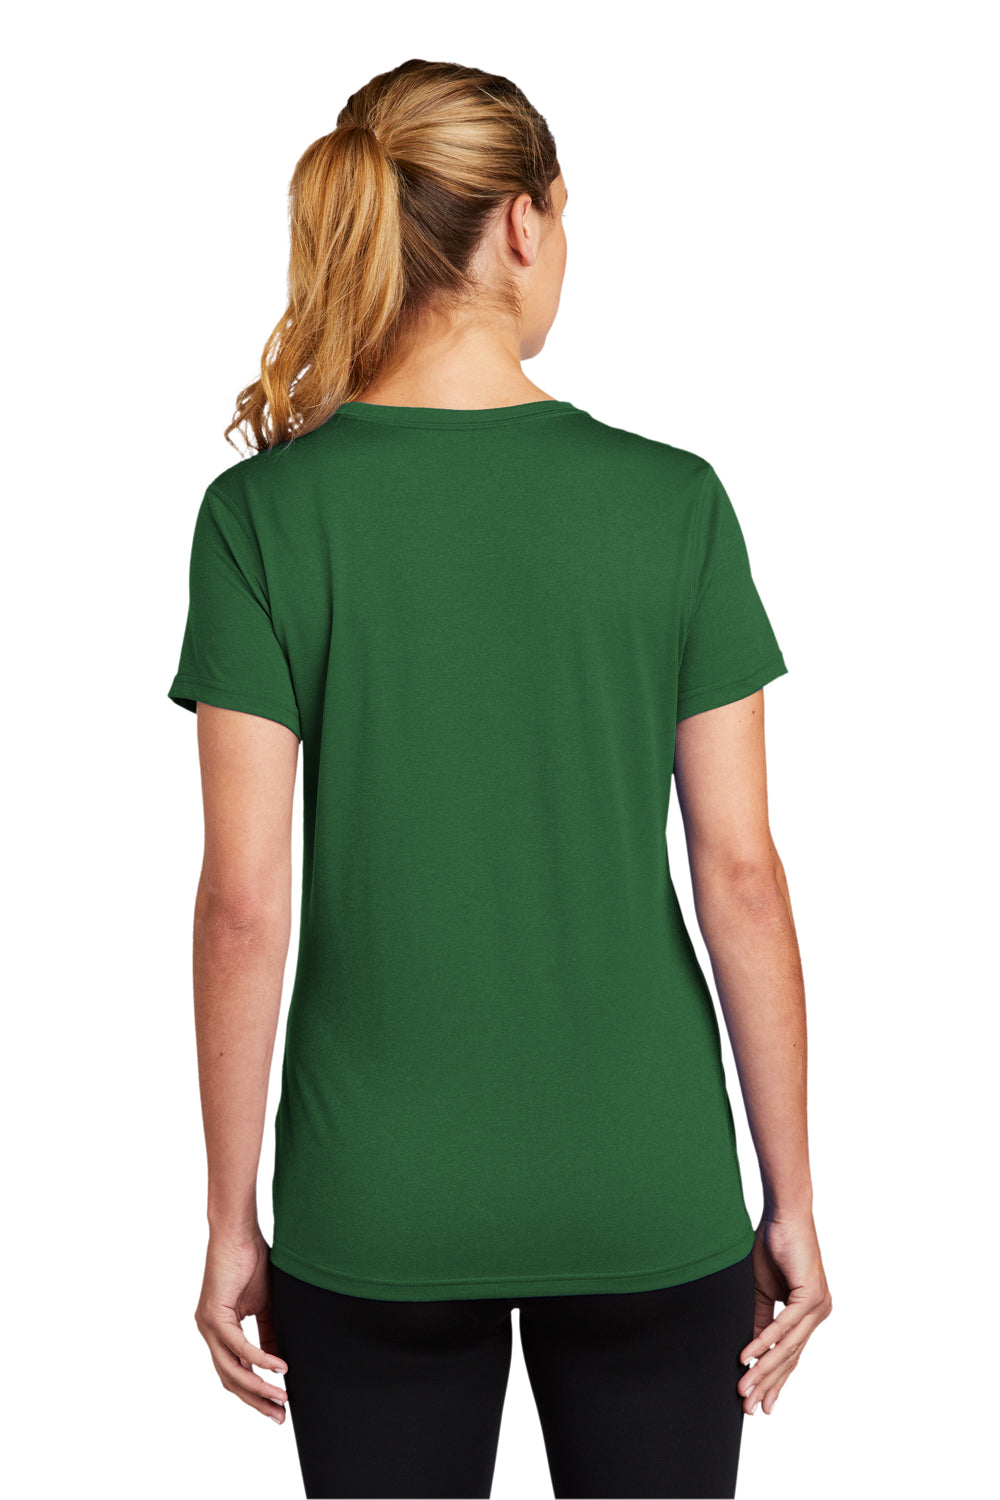 Nike CU7599 Womens Legend Dri-Fit Moisture Wicking Short Sleeve Crewneck T-Shirt Gorge Green Model Back